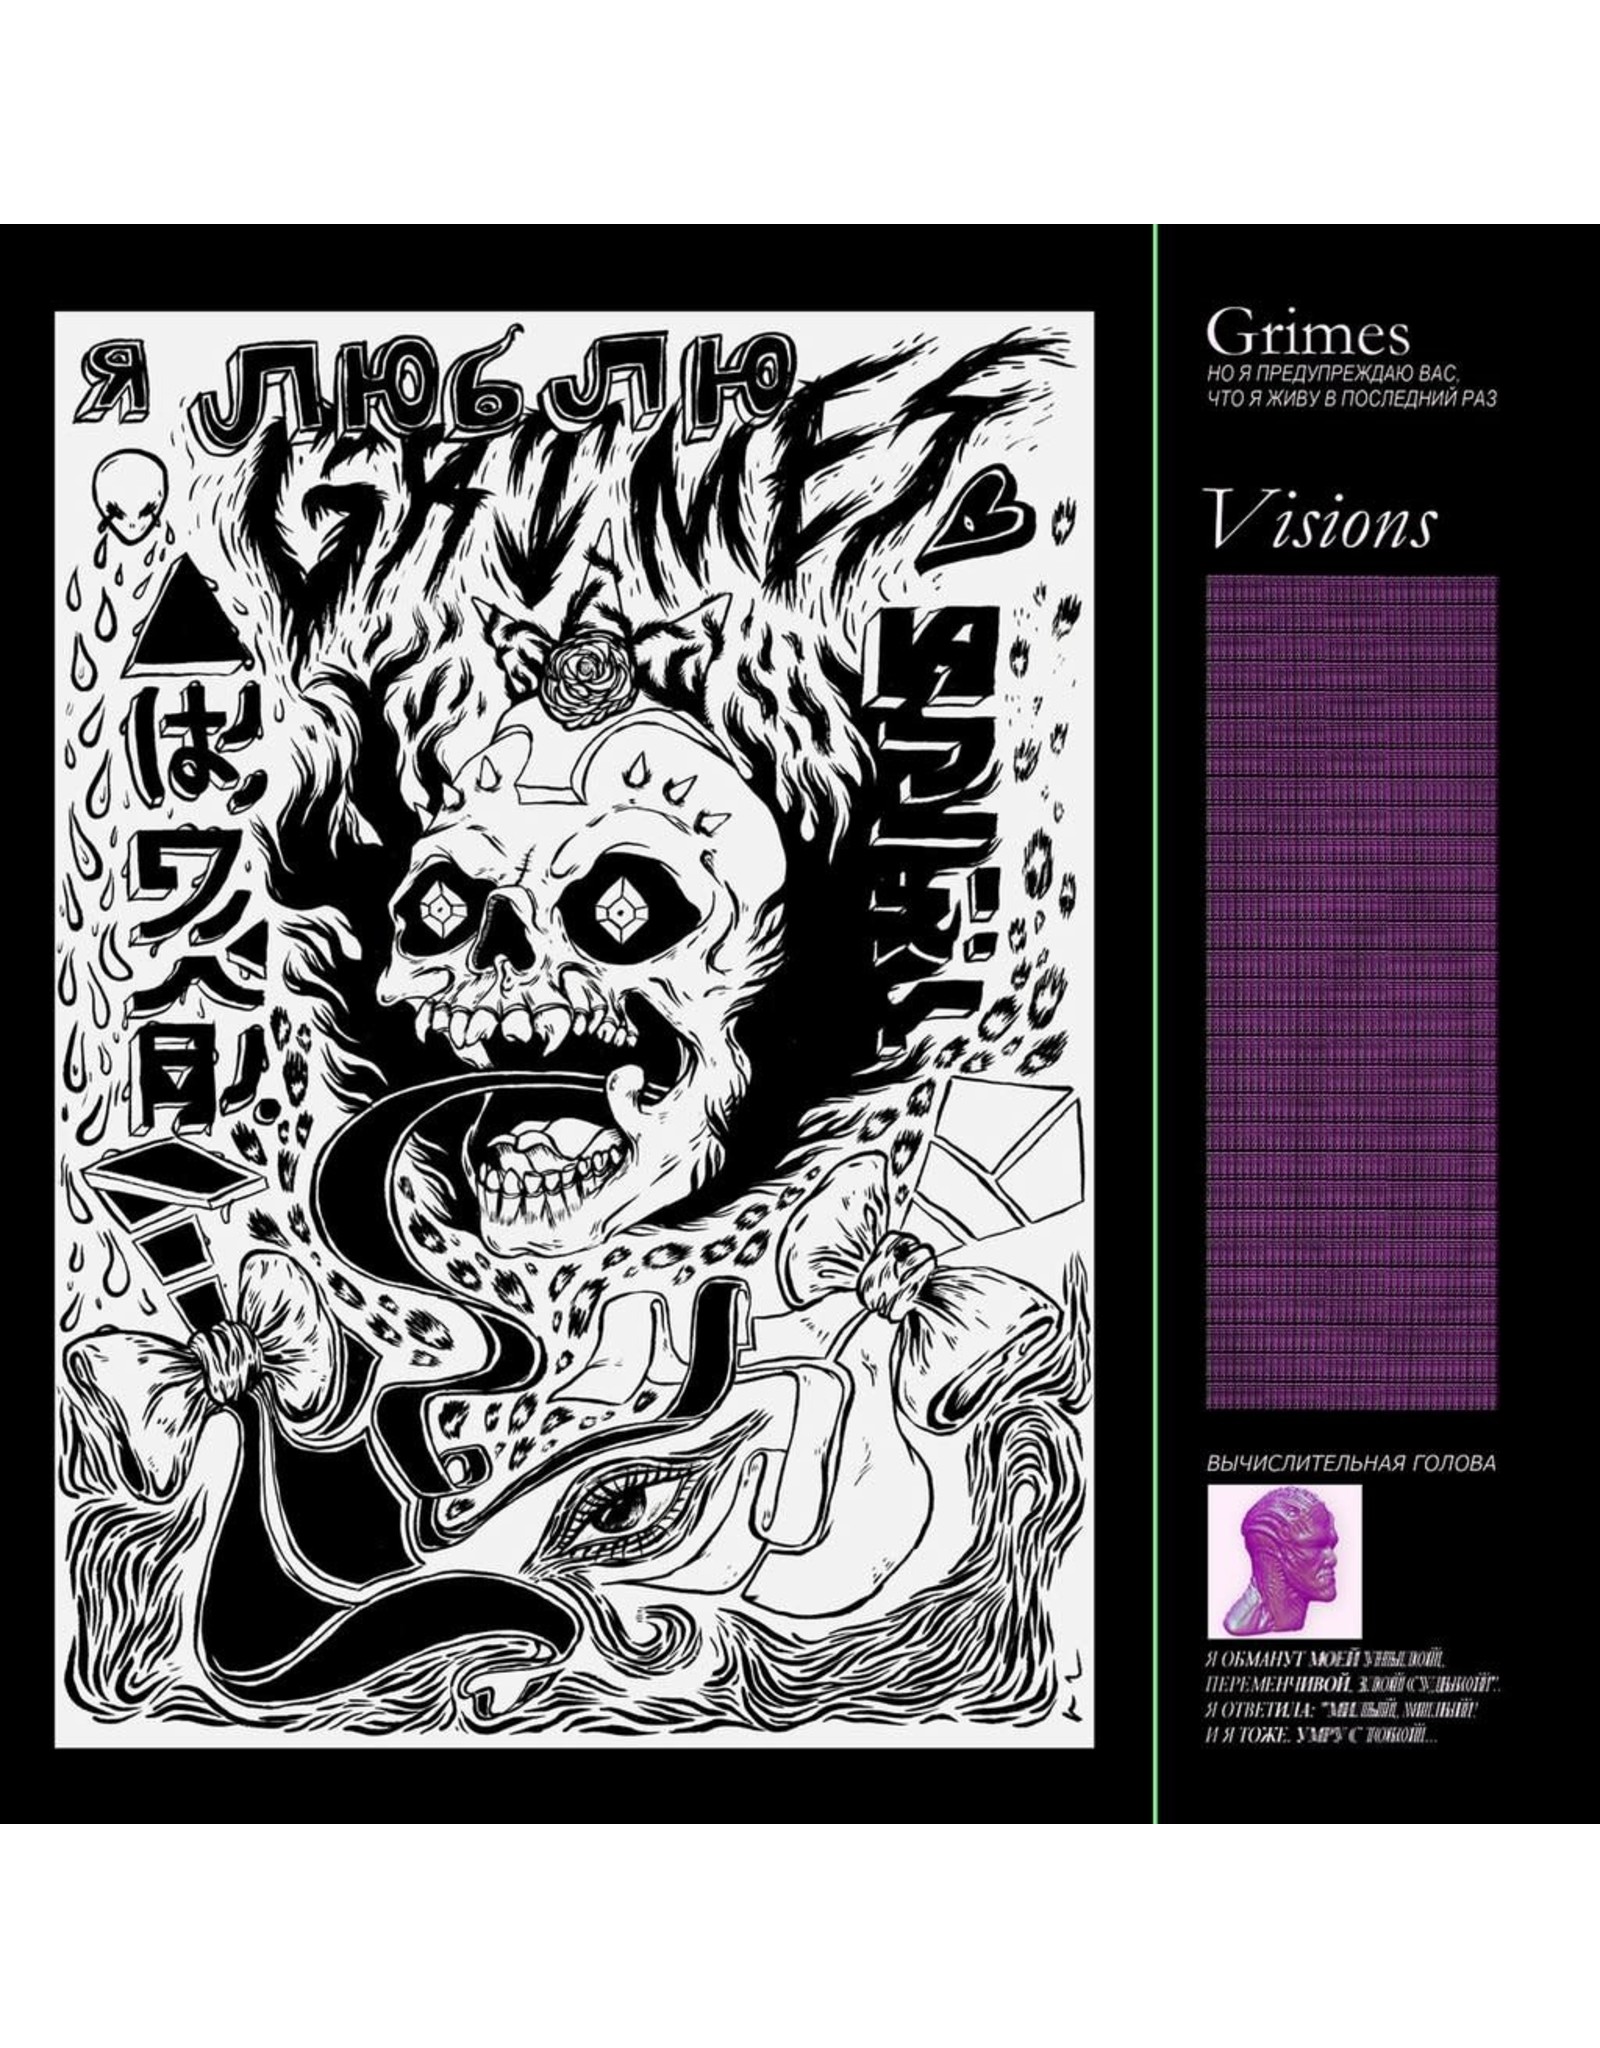 Grimes - Visions